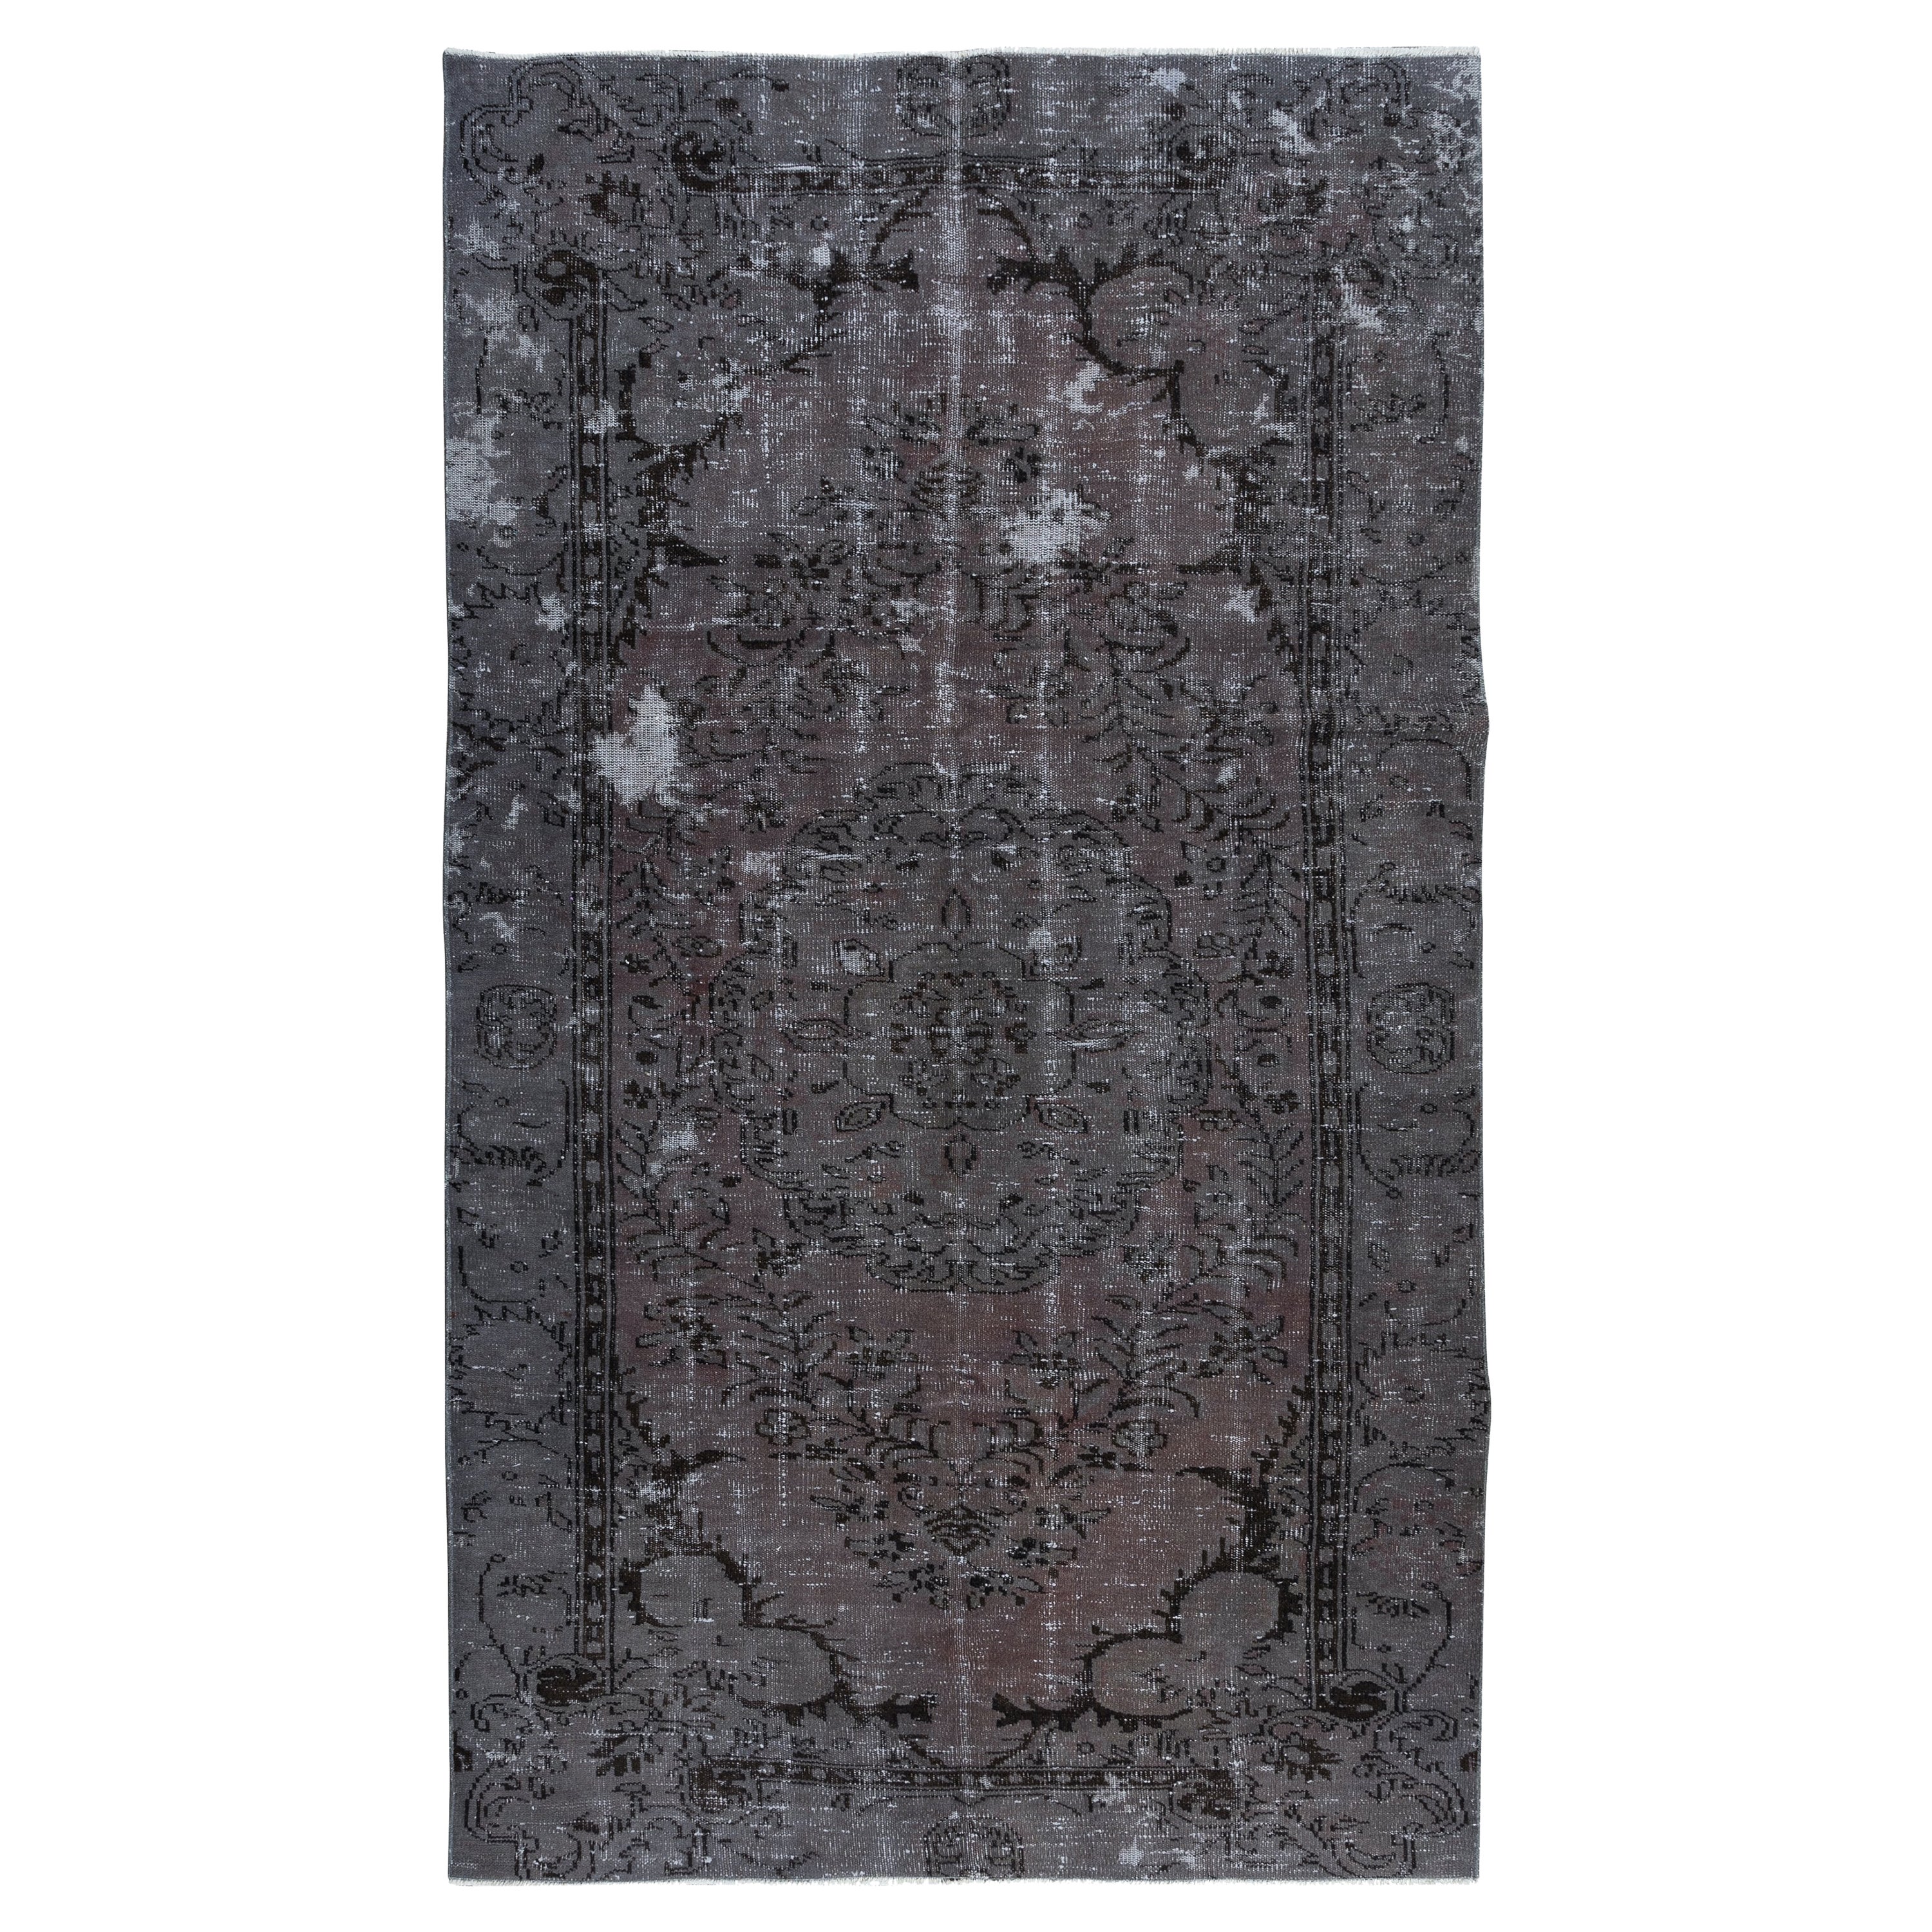 5x8.8 Ft Handmade Gray Indoor-Outdoor Rug, Medallion Design Anatolian Carpet